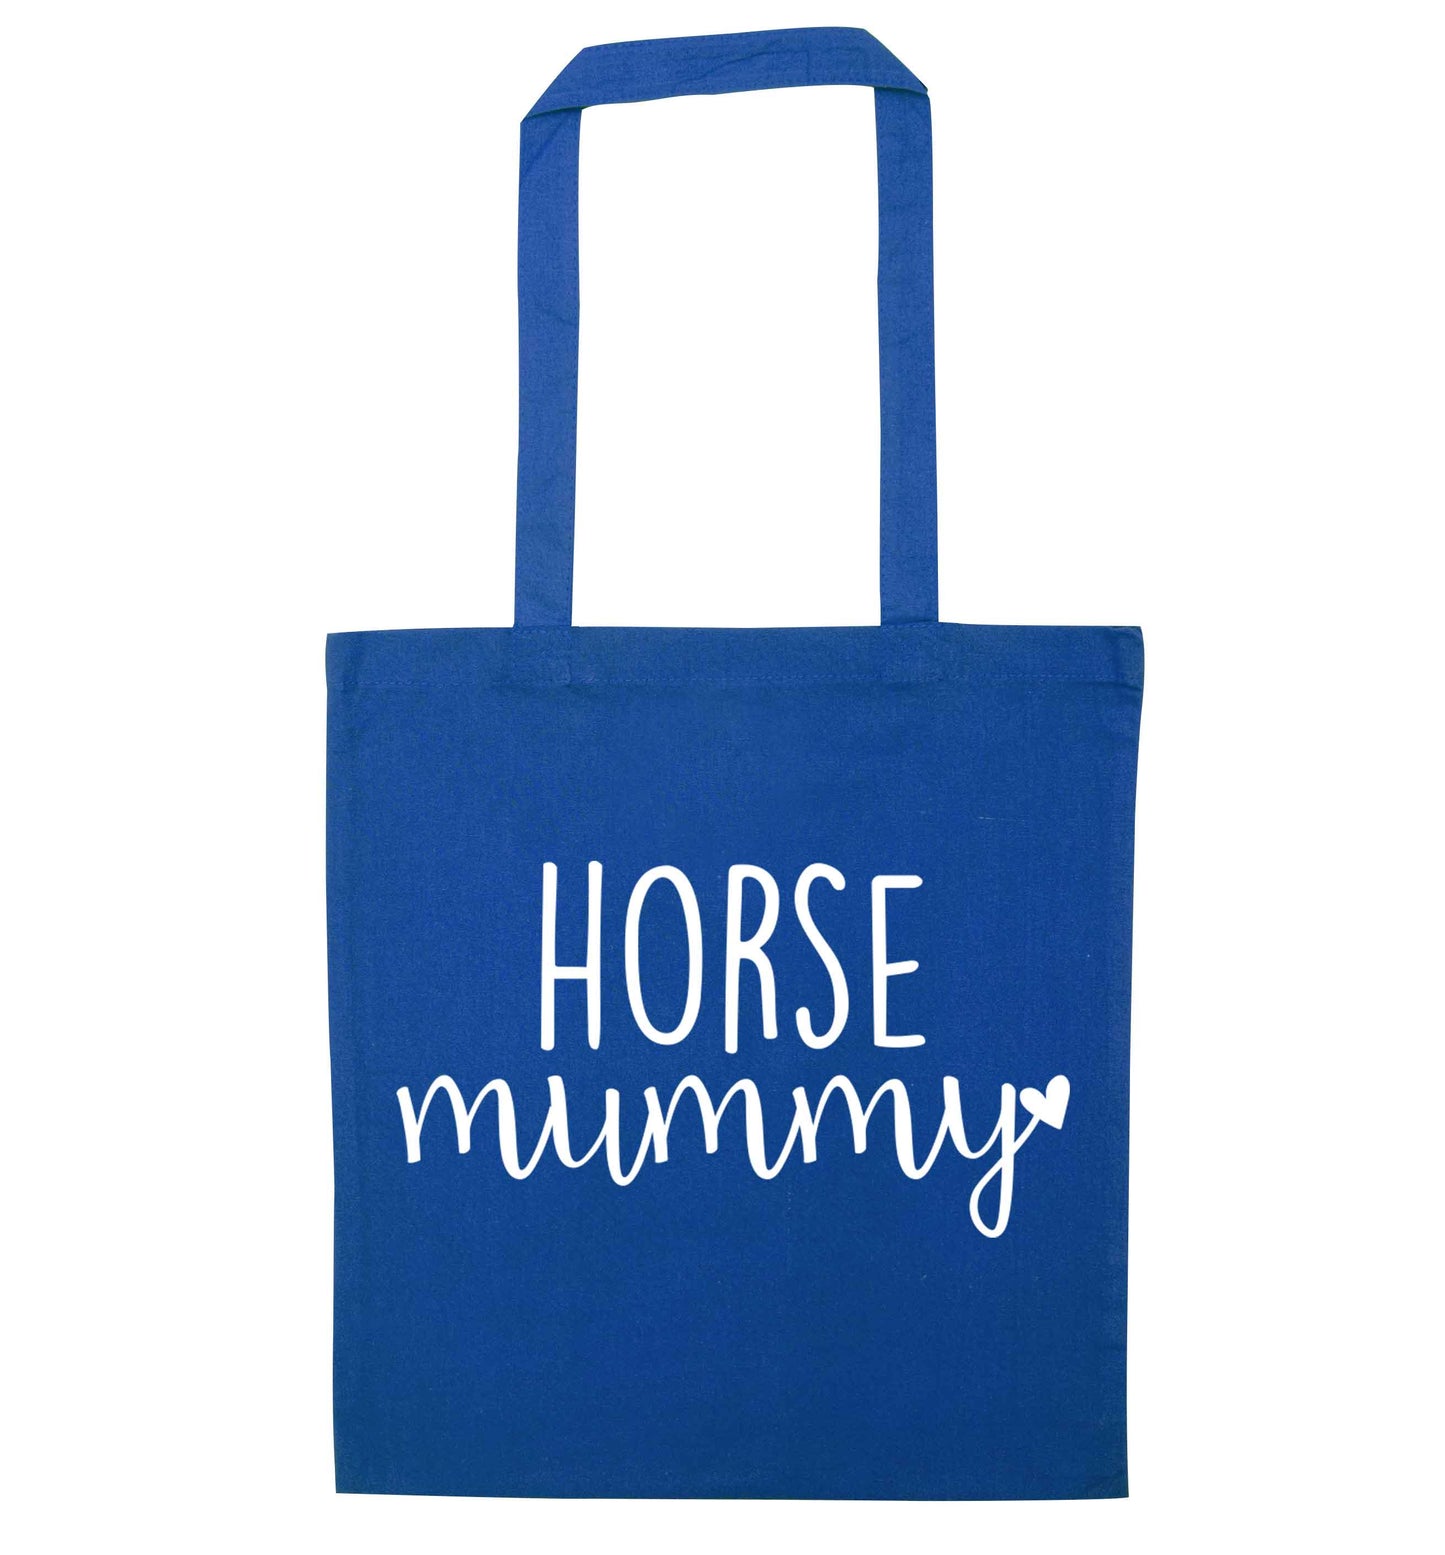 Horse mummy blue tote bag